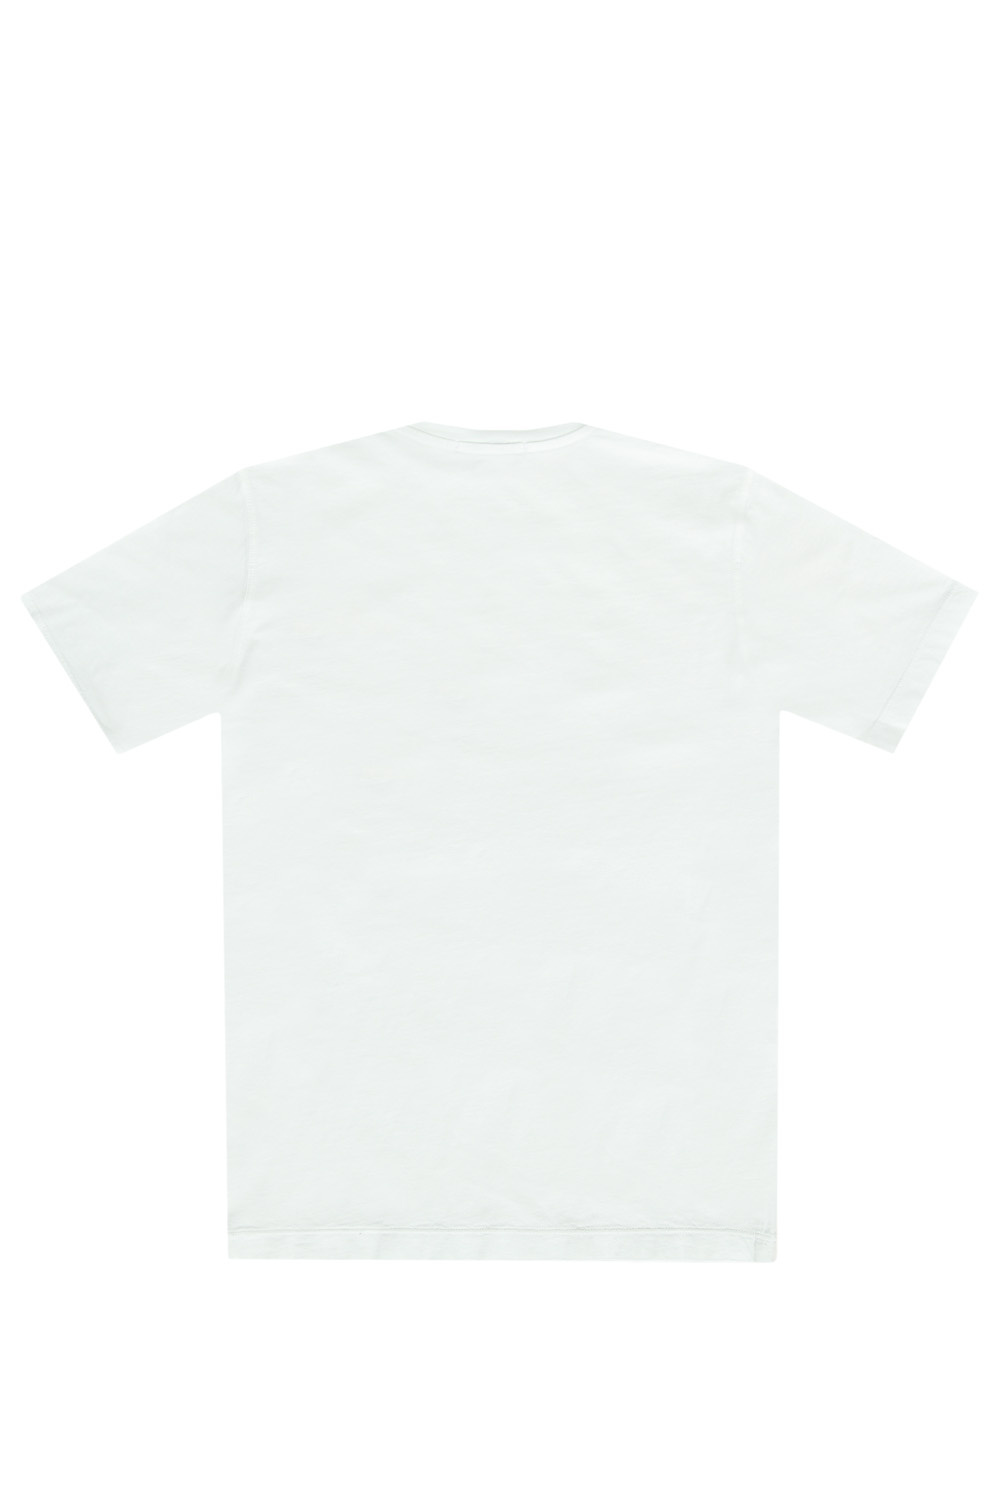 Stone Island Kids T-Shirt Osklen Soft Used Cocar-PretoP